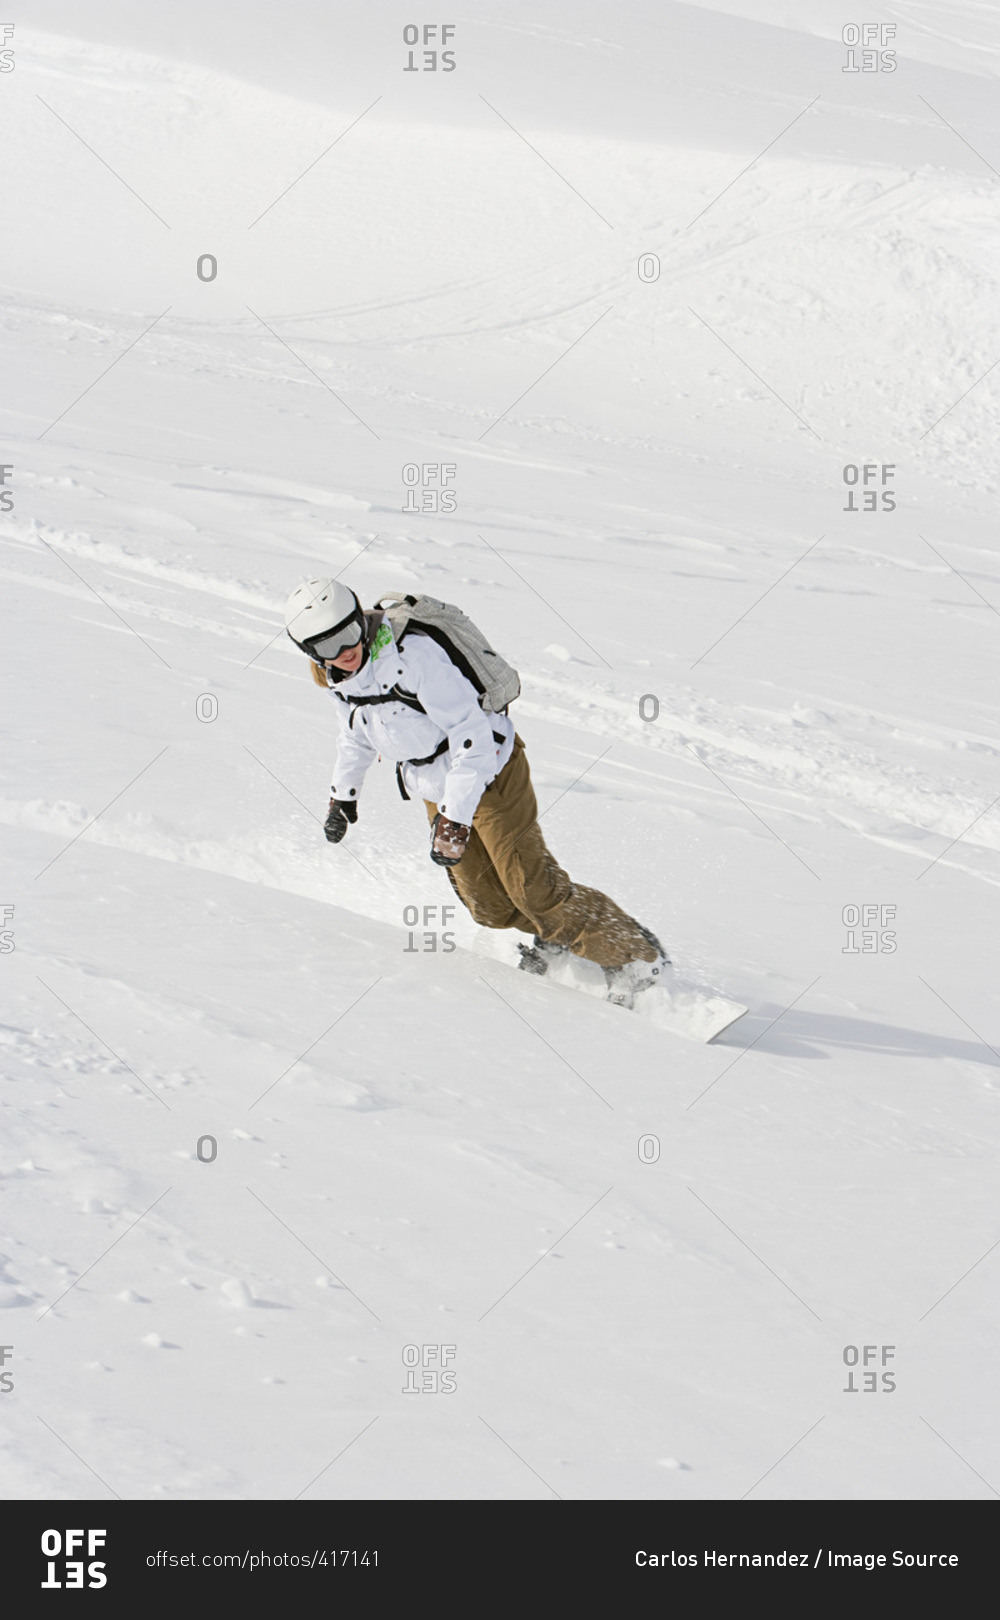 A woman snowboarding